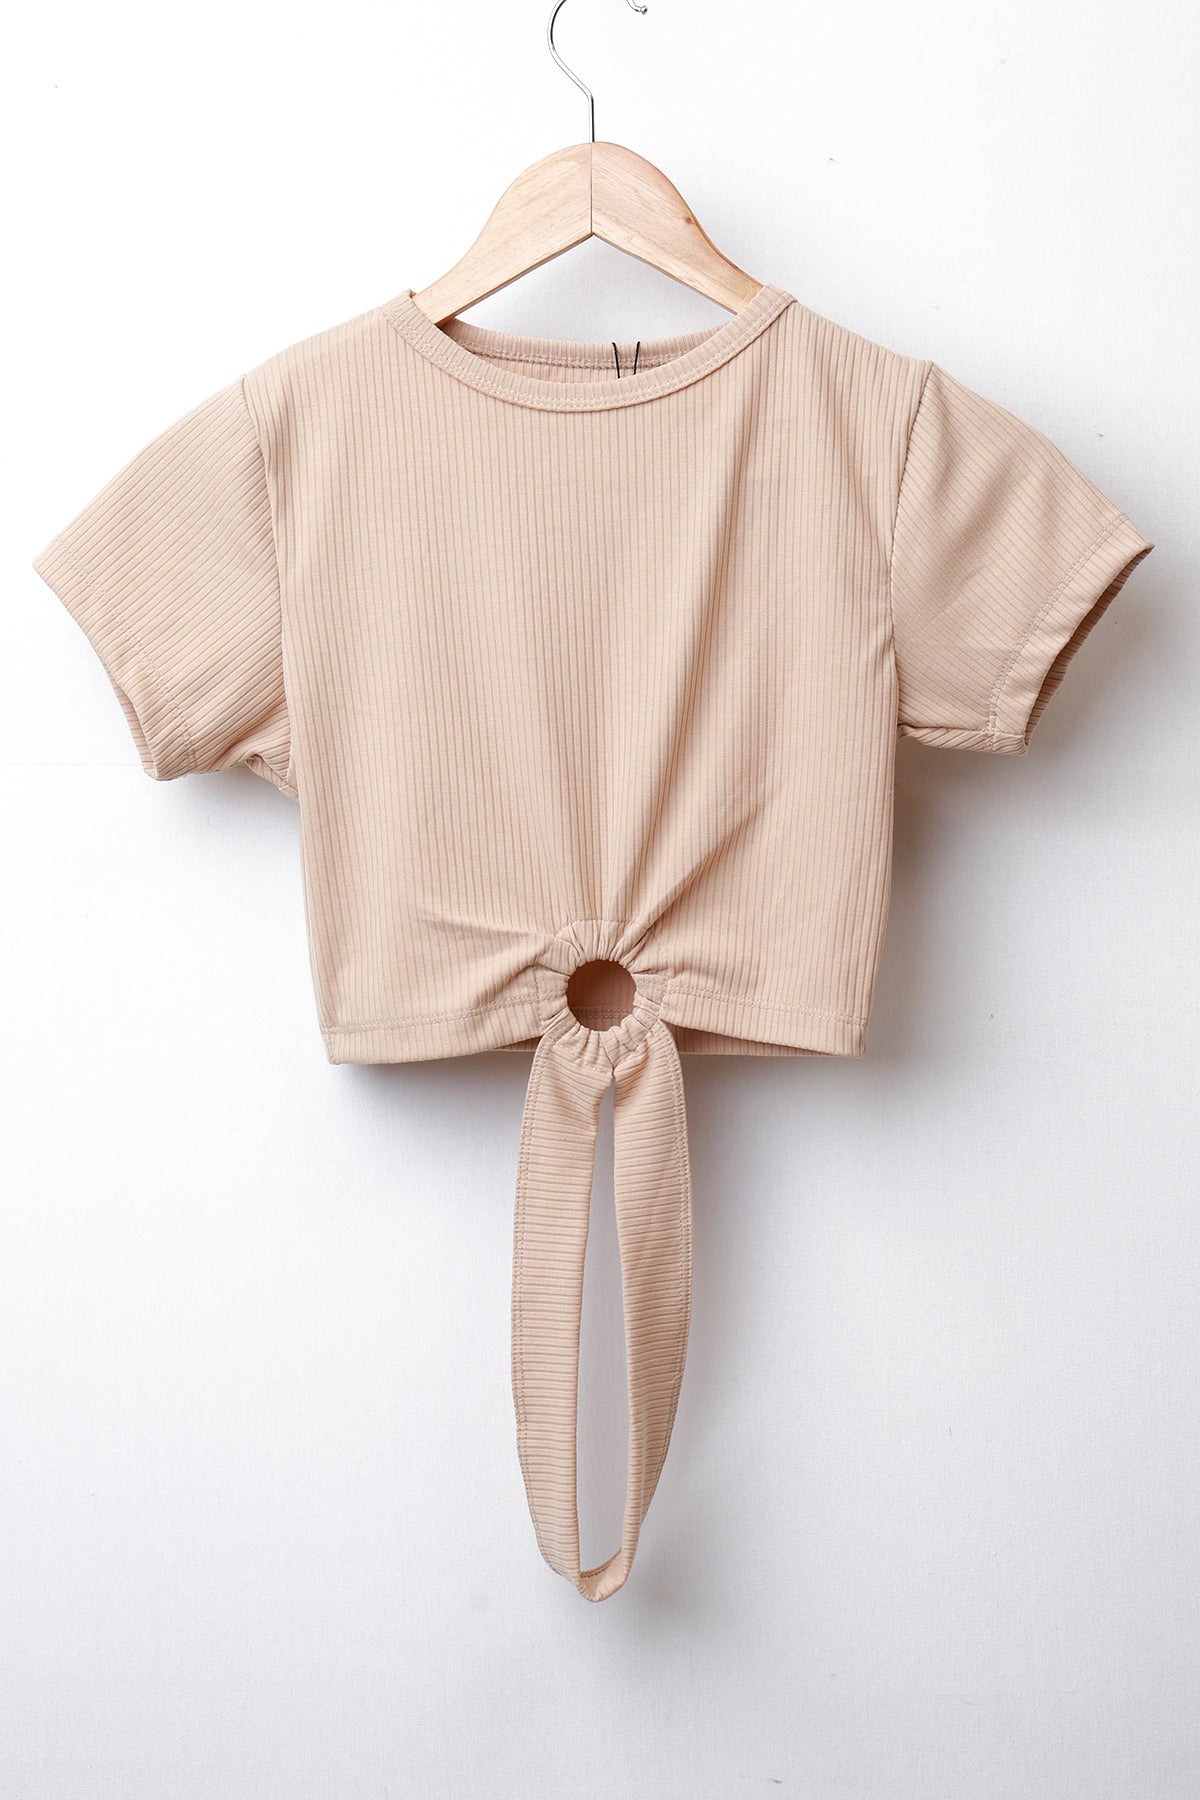 Modano Women's Short Sleeve Casual Crop Top